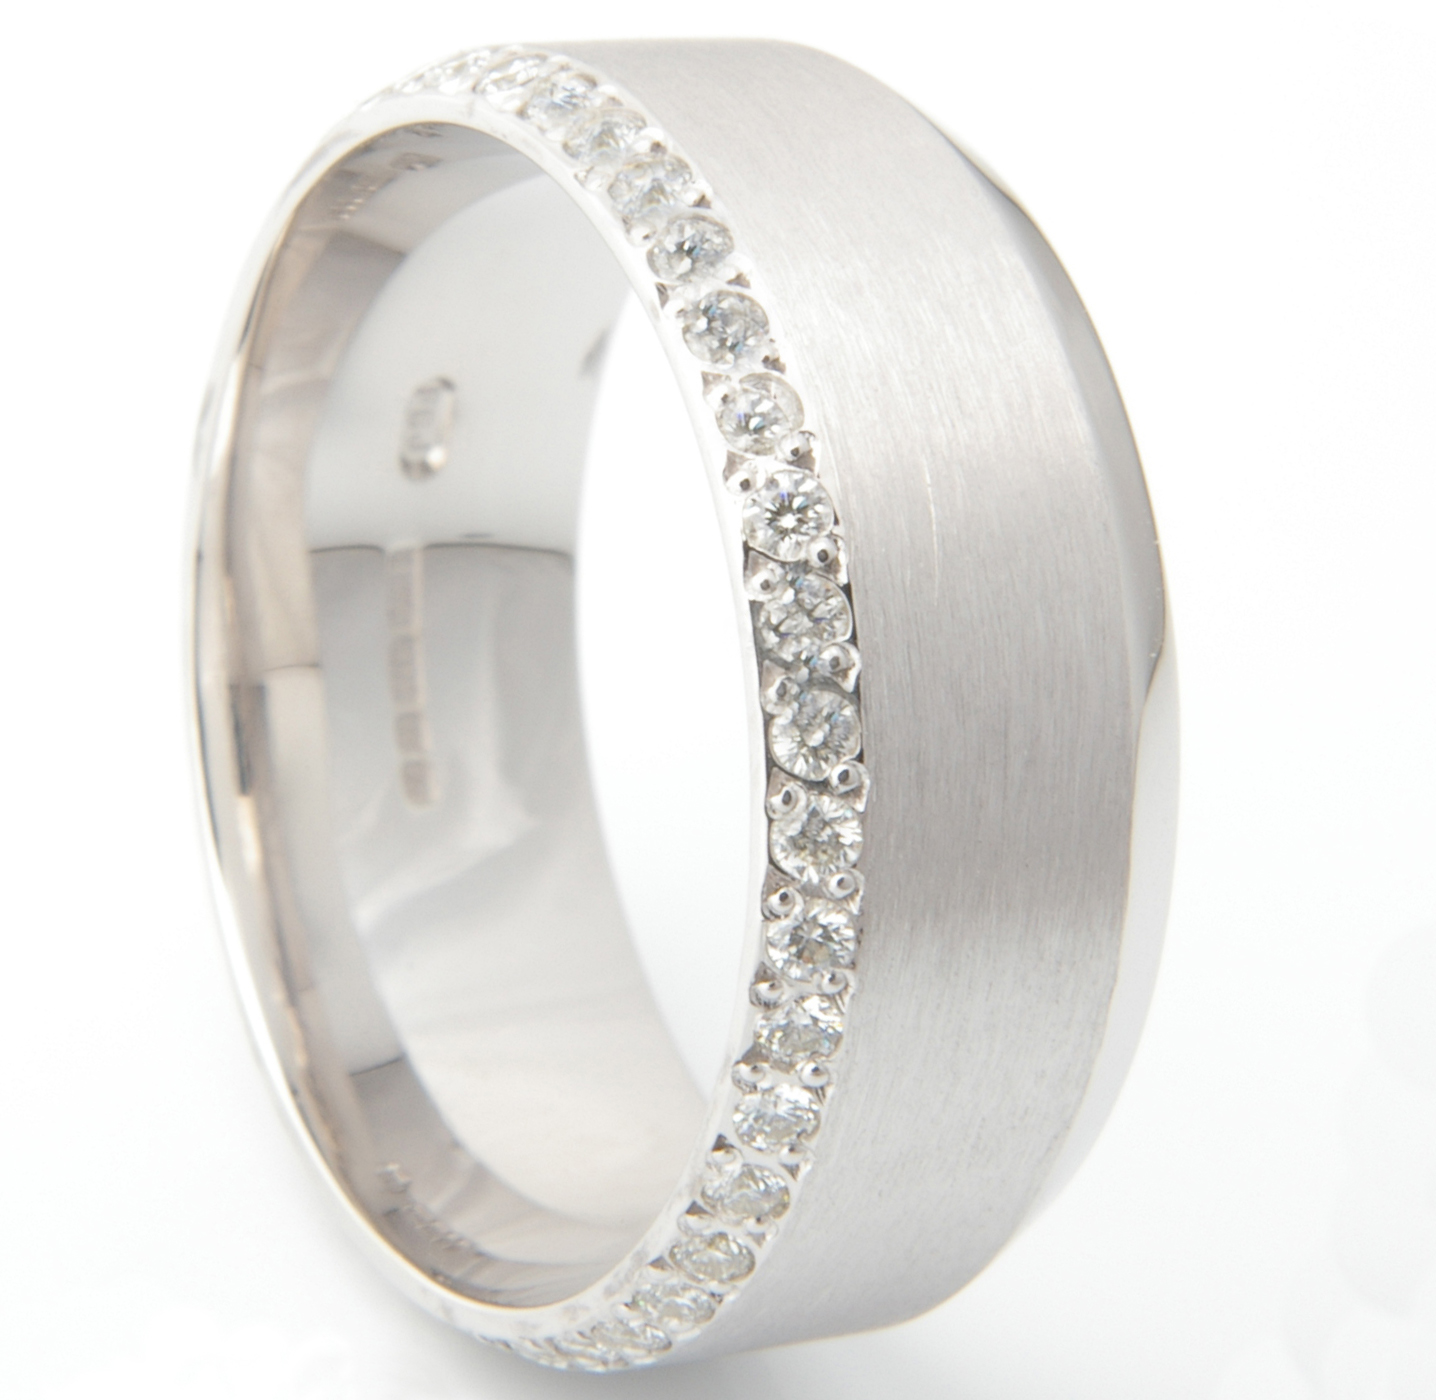 Jon Keith Diamonds: Matching Wedding rings